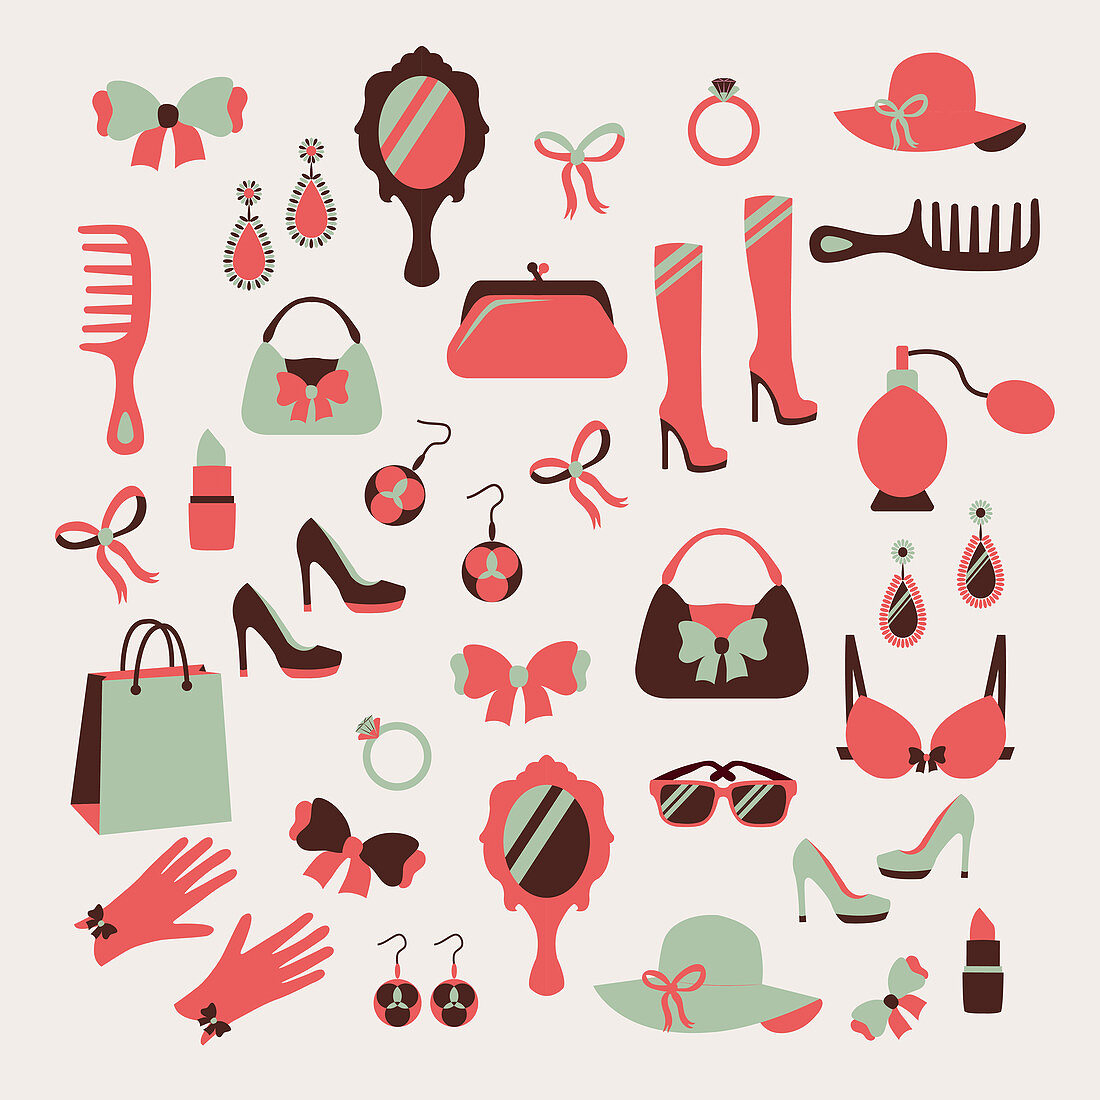 Woman's accessories, illustration